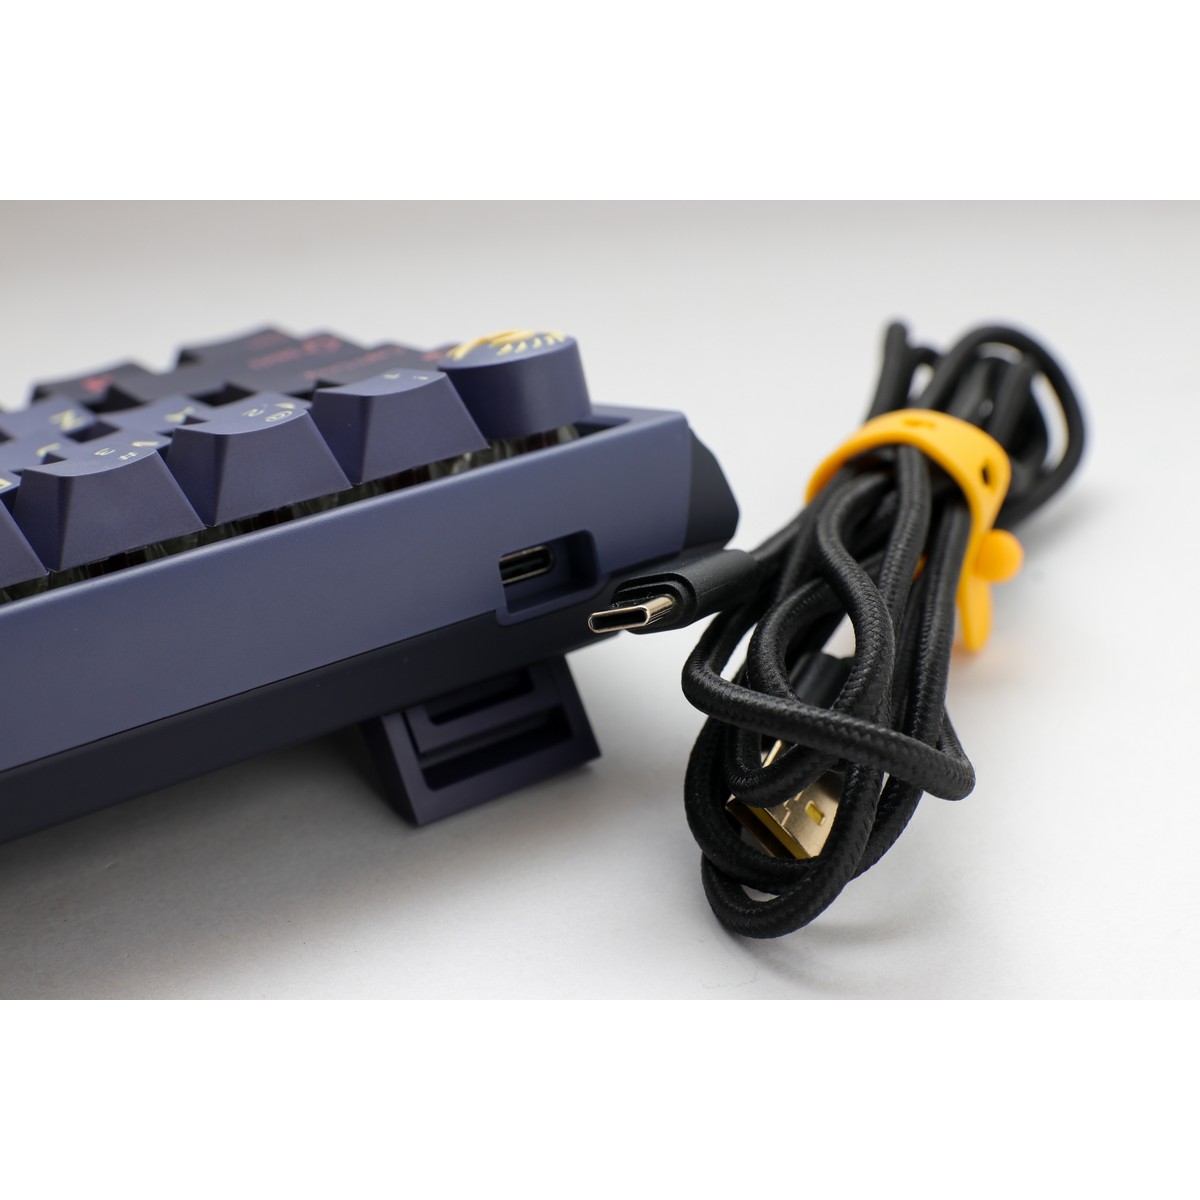 Ducky - Ducky One 3 Cosmic Mini 60% USB RGB Mechanical Gaming Keyboard Cherry MX Blue Switch - UK Layout